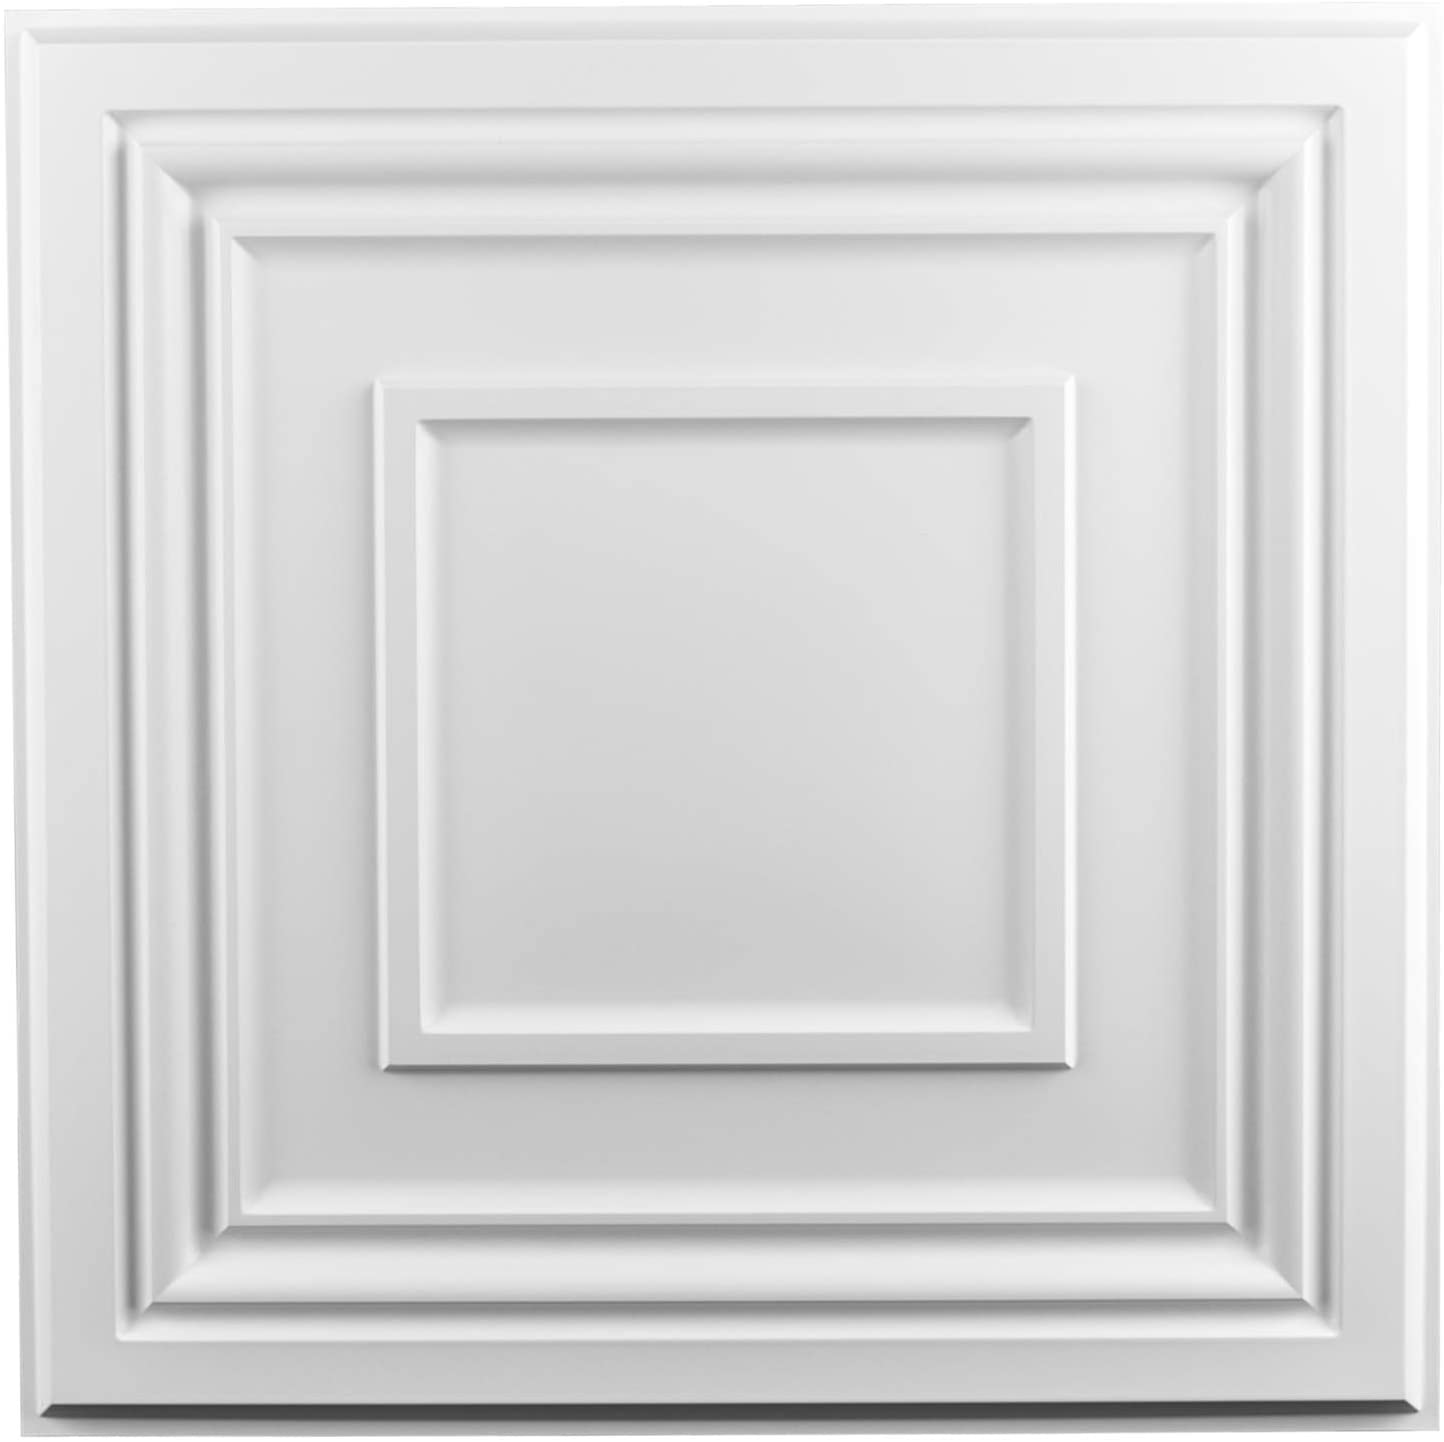 Photo 1 of Art3d Decorative Drop Ceiling Tile 2x2 Pack of 12pcs Glue up Ceiling Panel Square Relief in Matt White NEW 605cm x 605cm